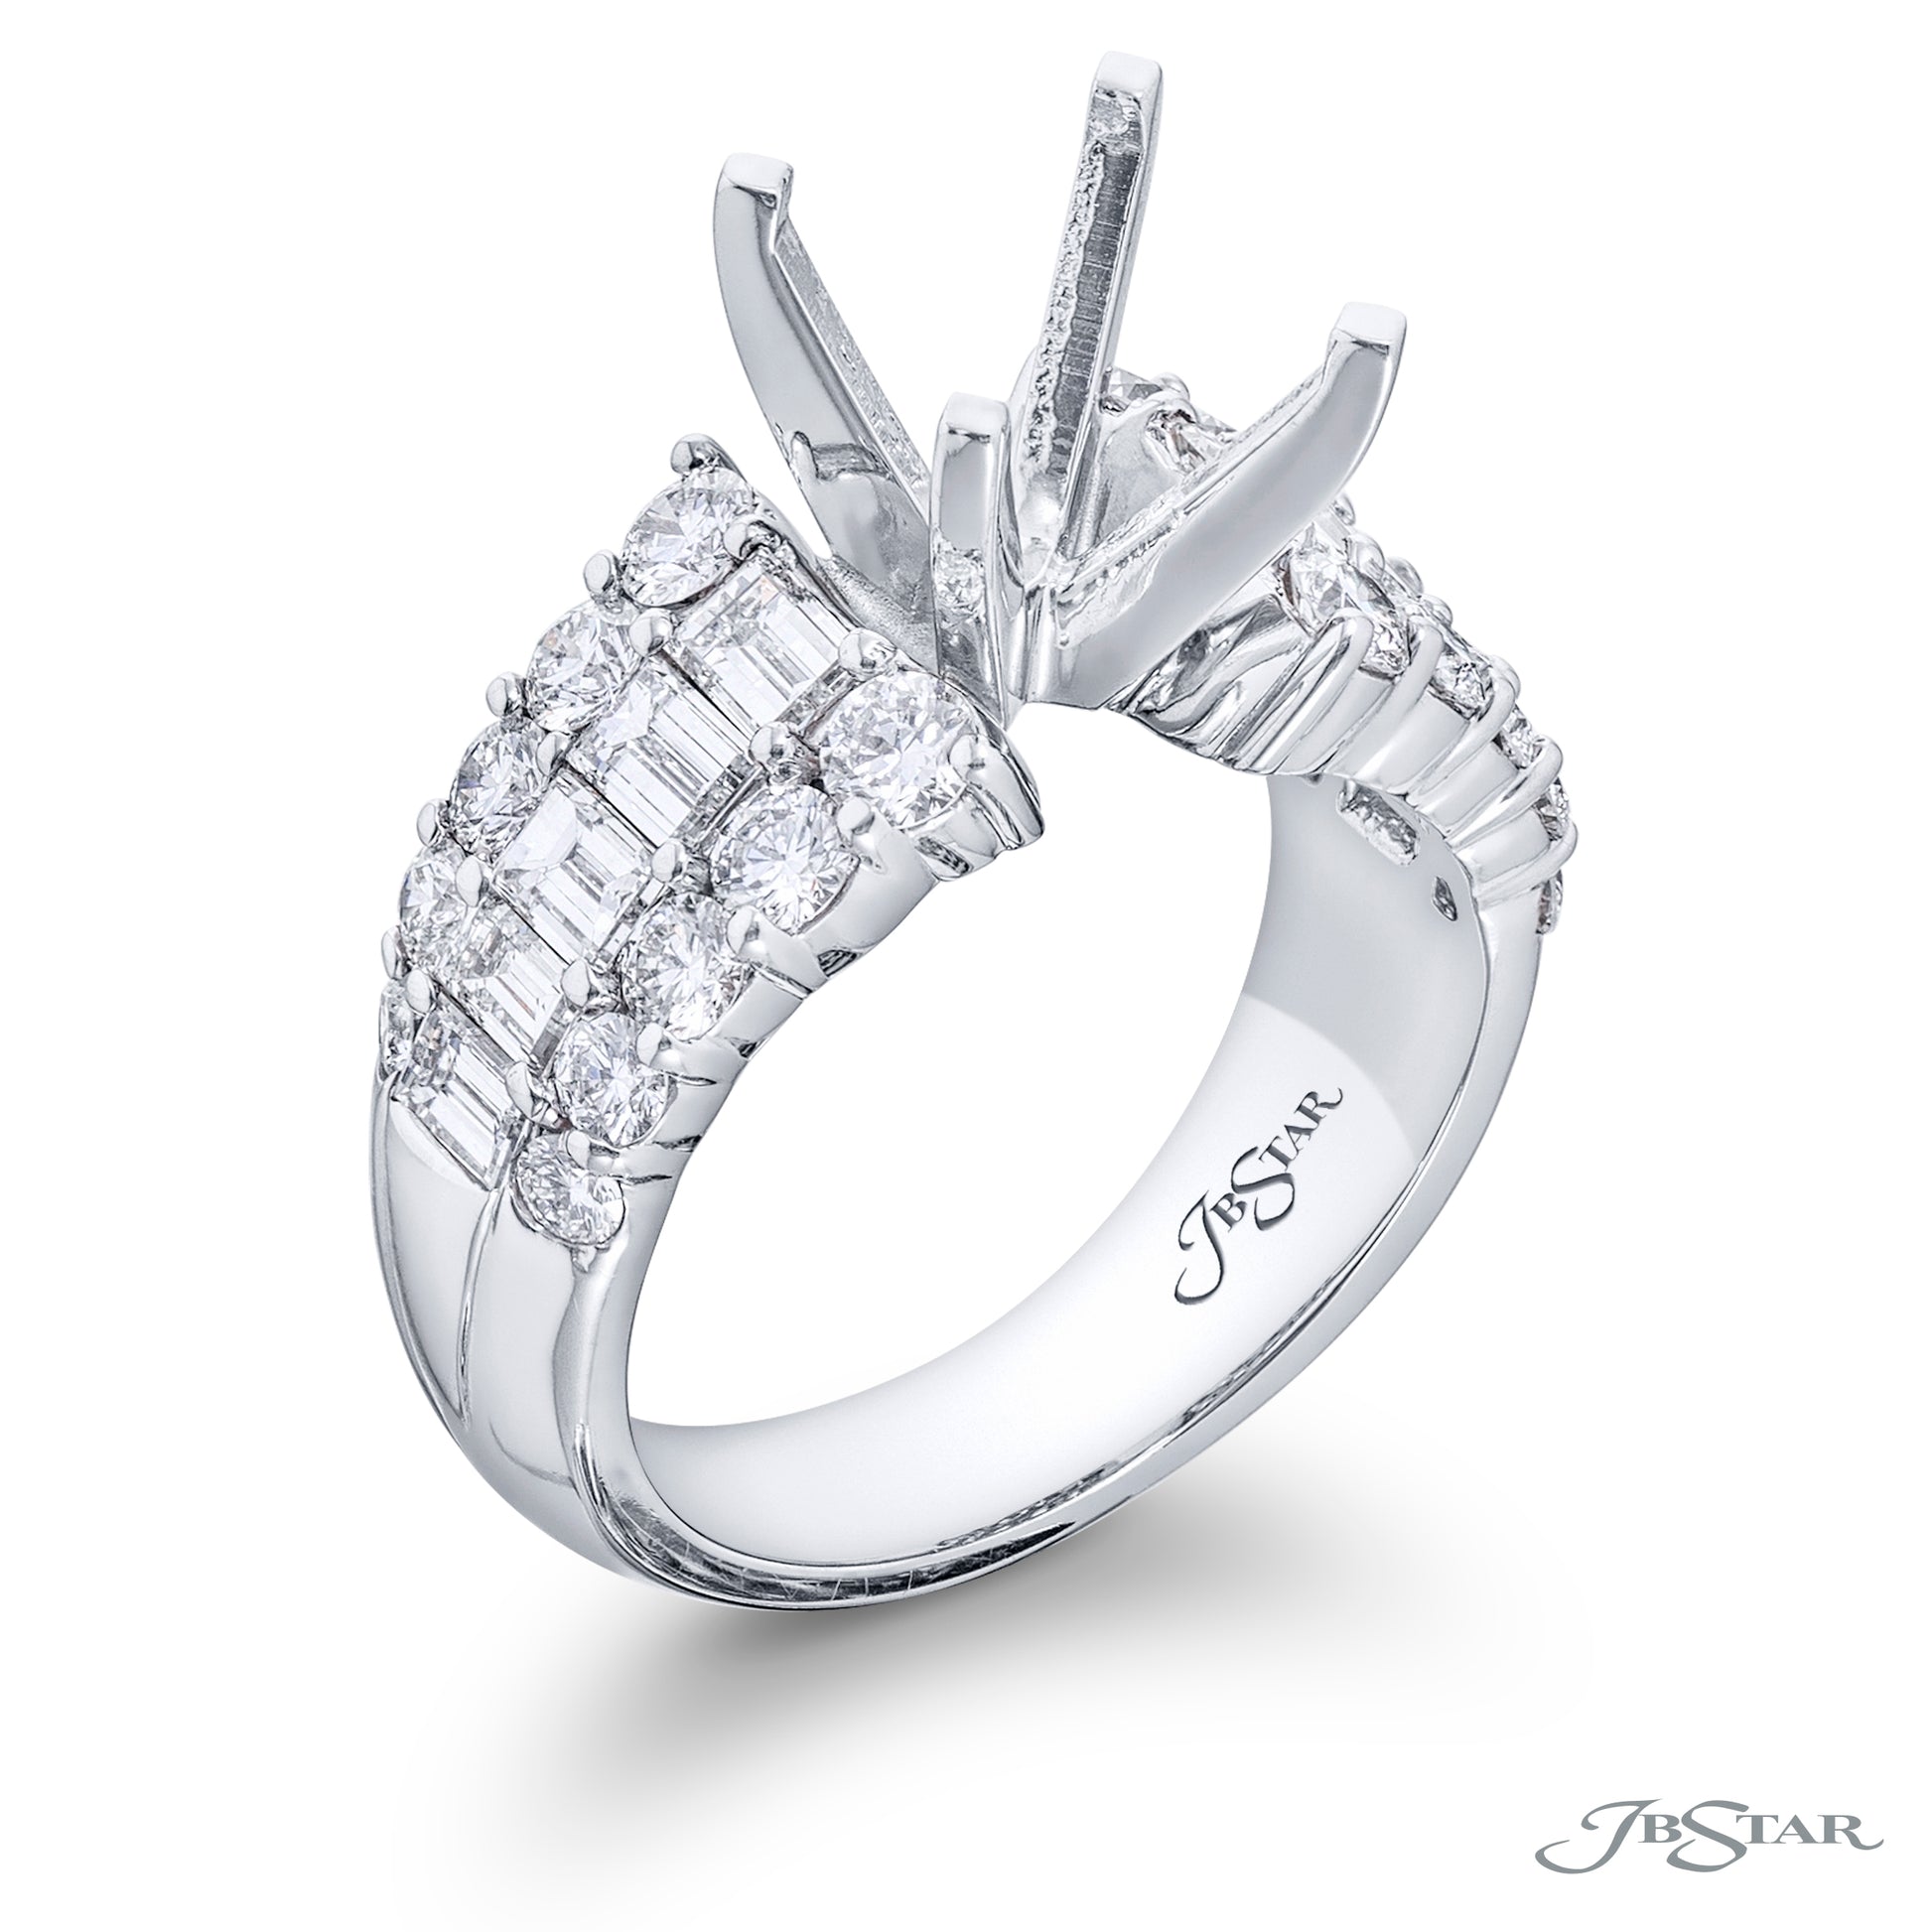 JB Star Platinum Wide Band Diamond Semi-Mount Engagement Ring - Diamond Semi-Mount Rings